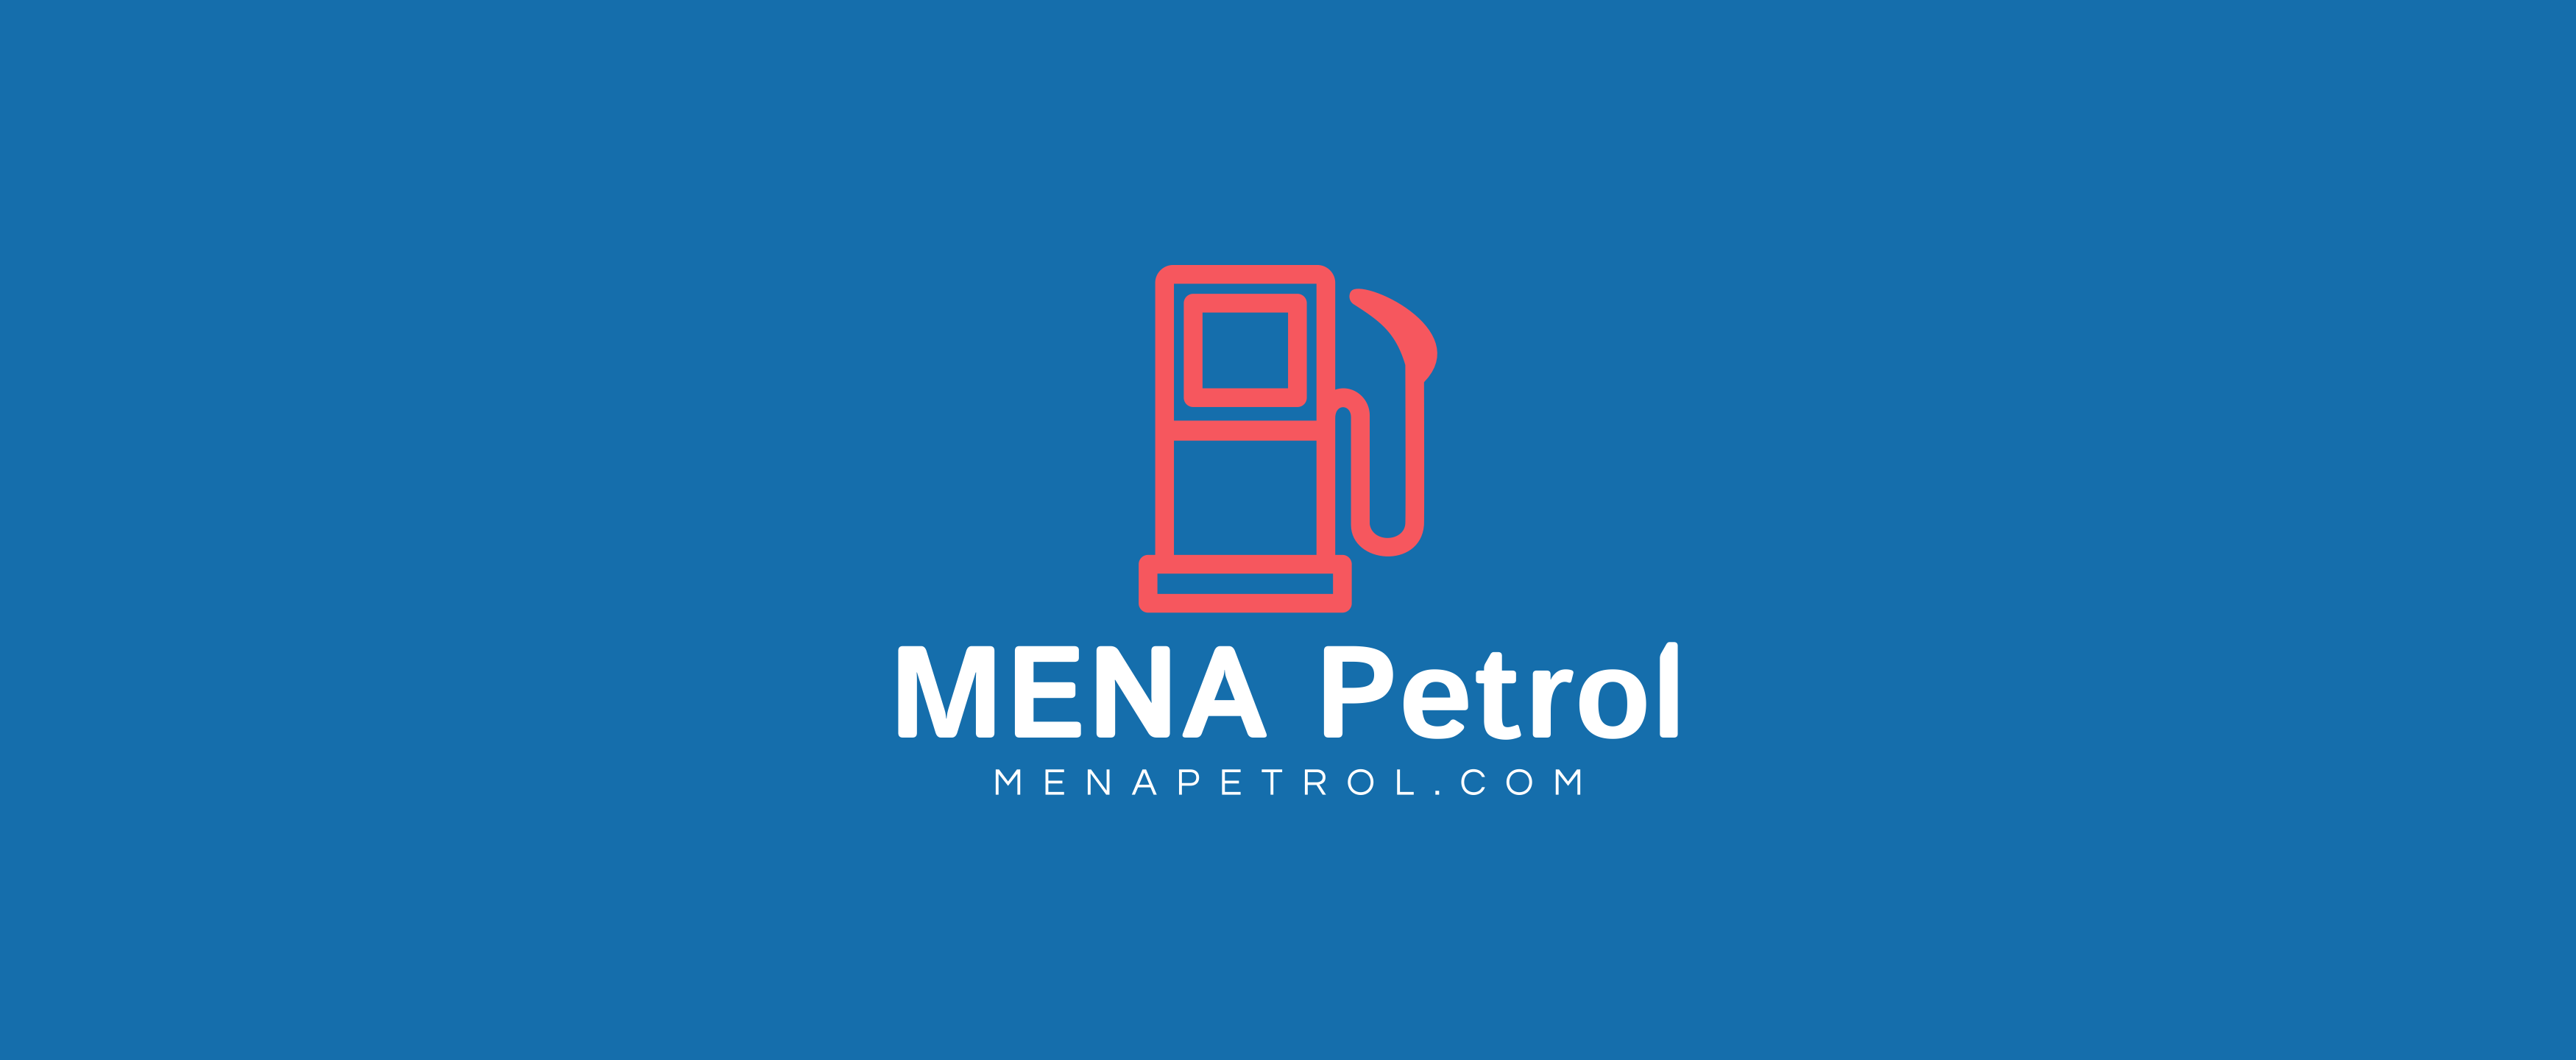 MENA Petrol